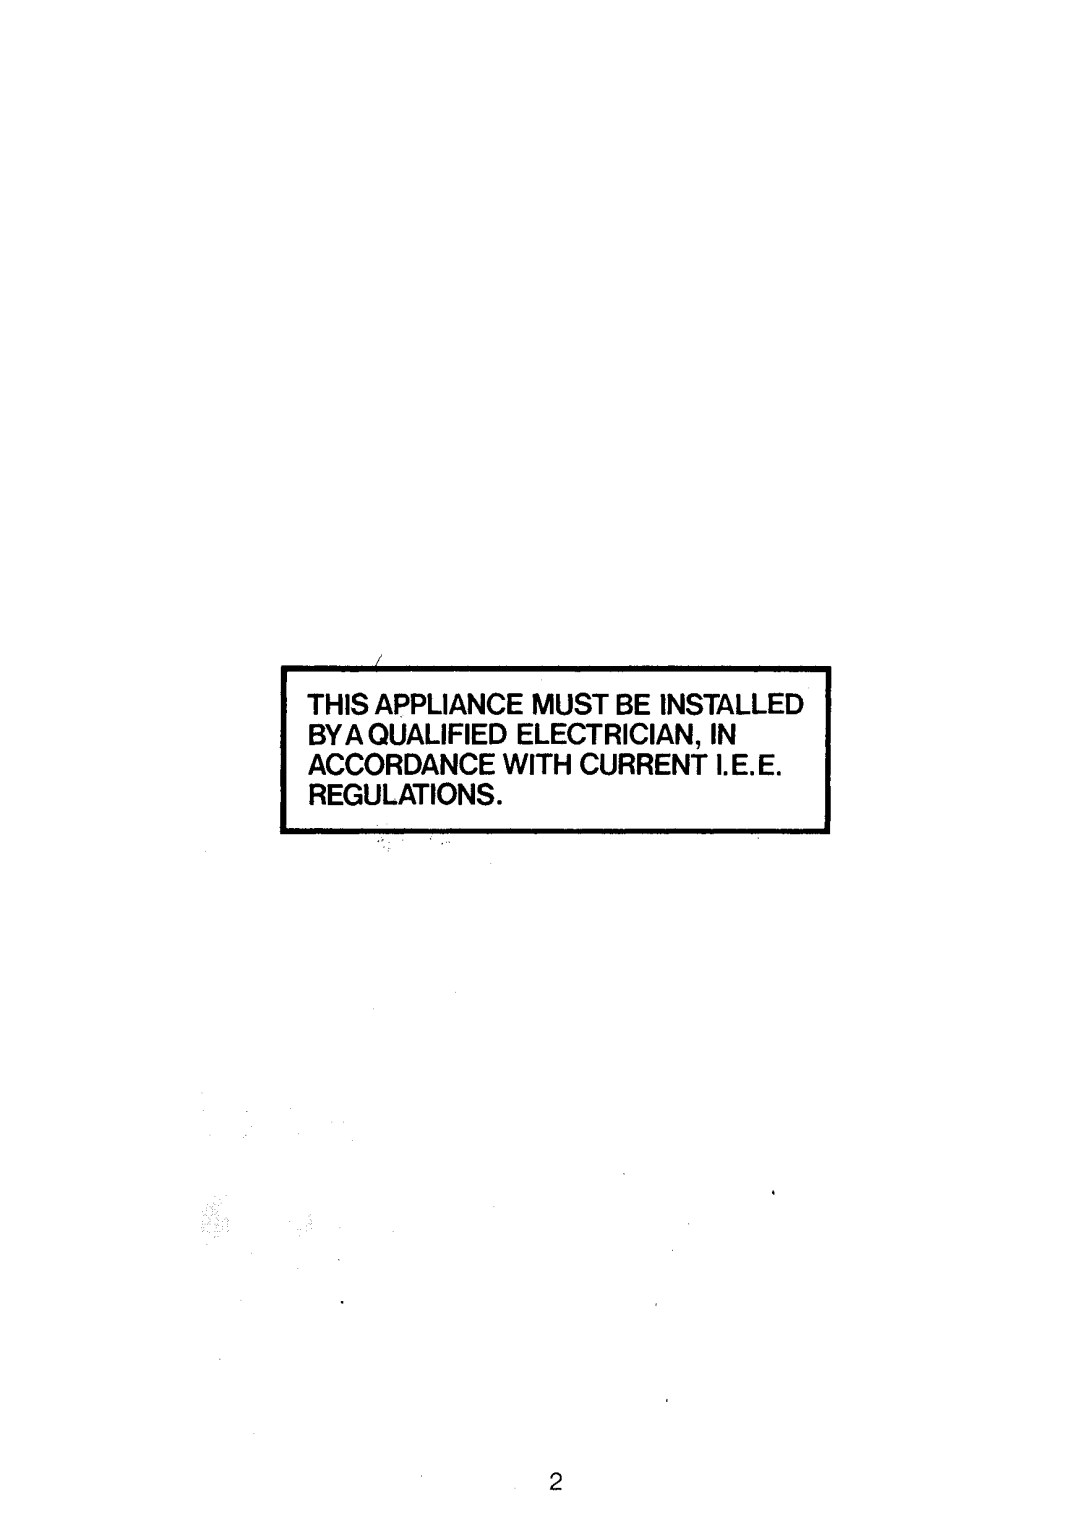 Electrolux CF463 manual 